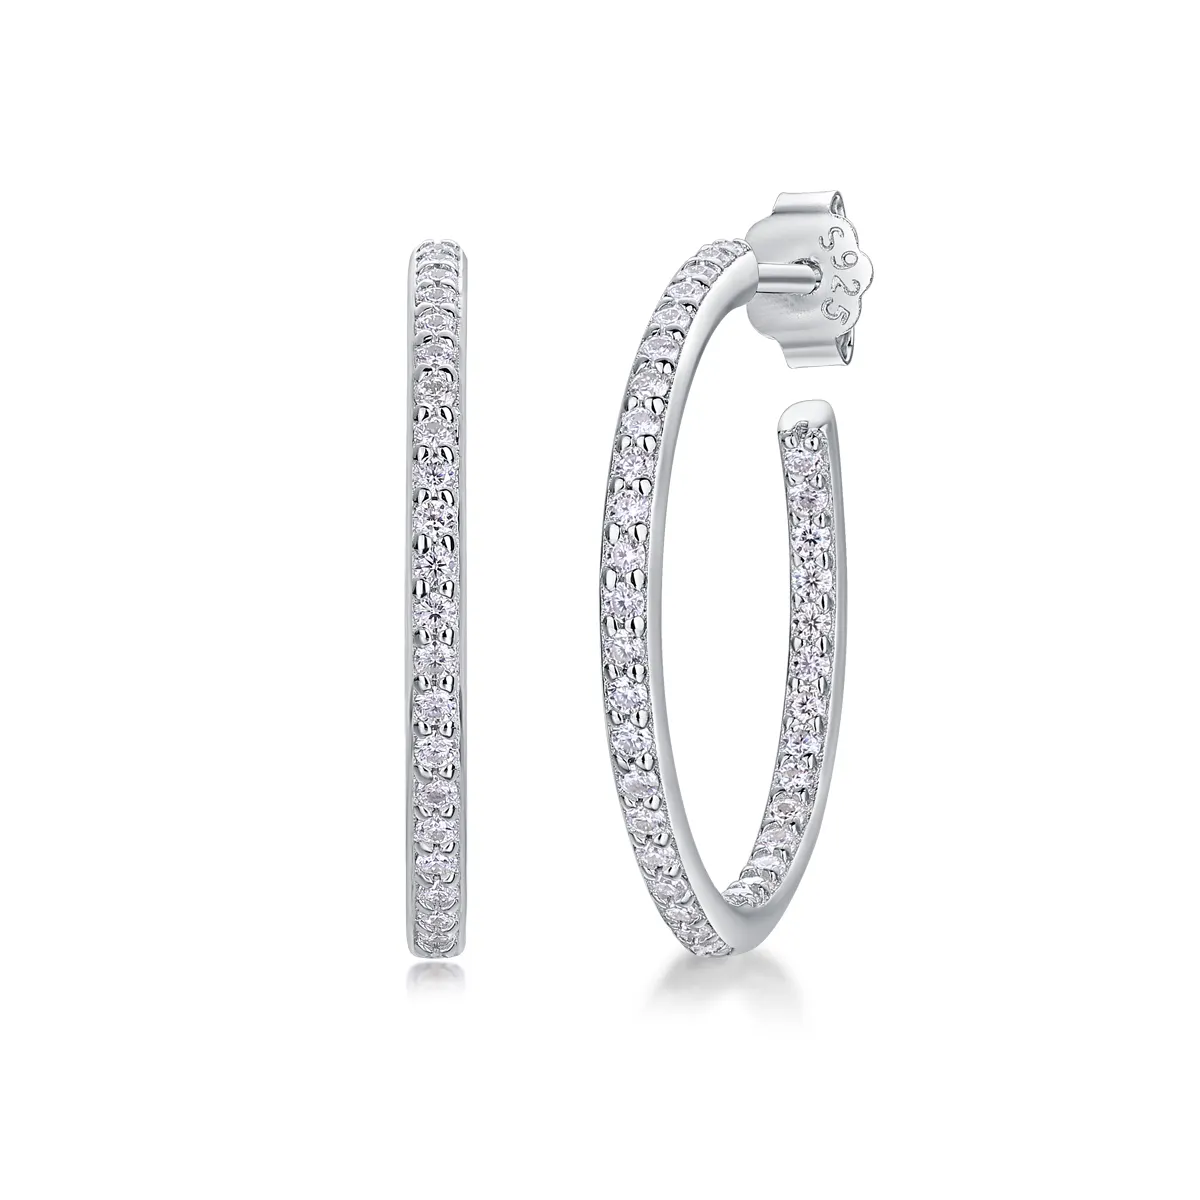 Best Selling Classics Design Moissanite Silver Jewelry Women Gift Party SterlingStone WeddingTechnology party Eternity Earrings